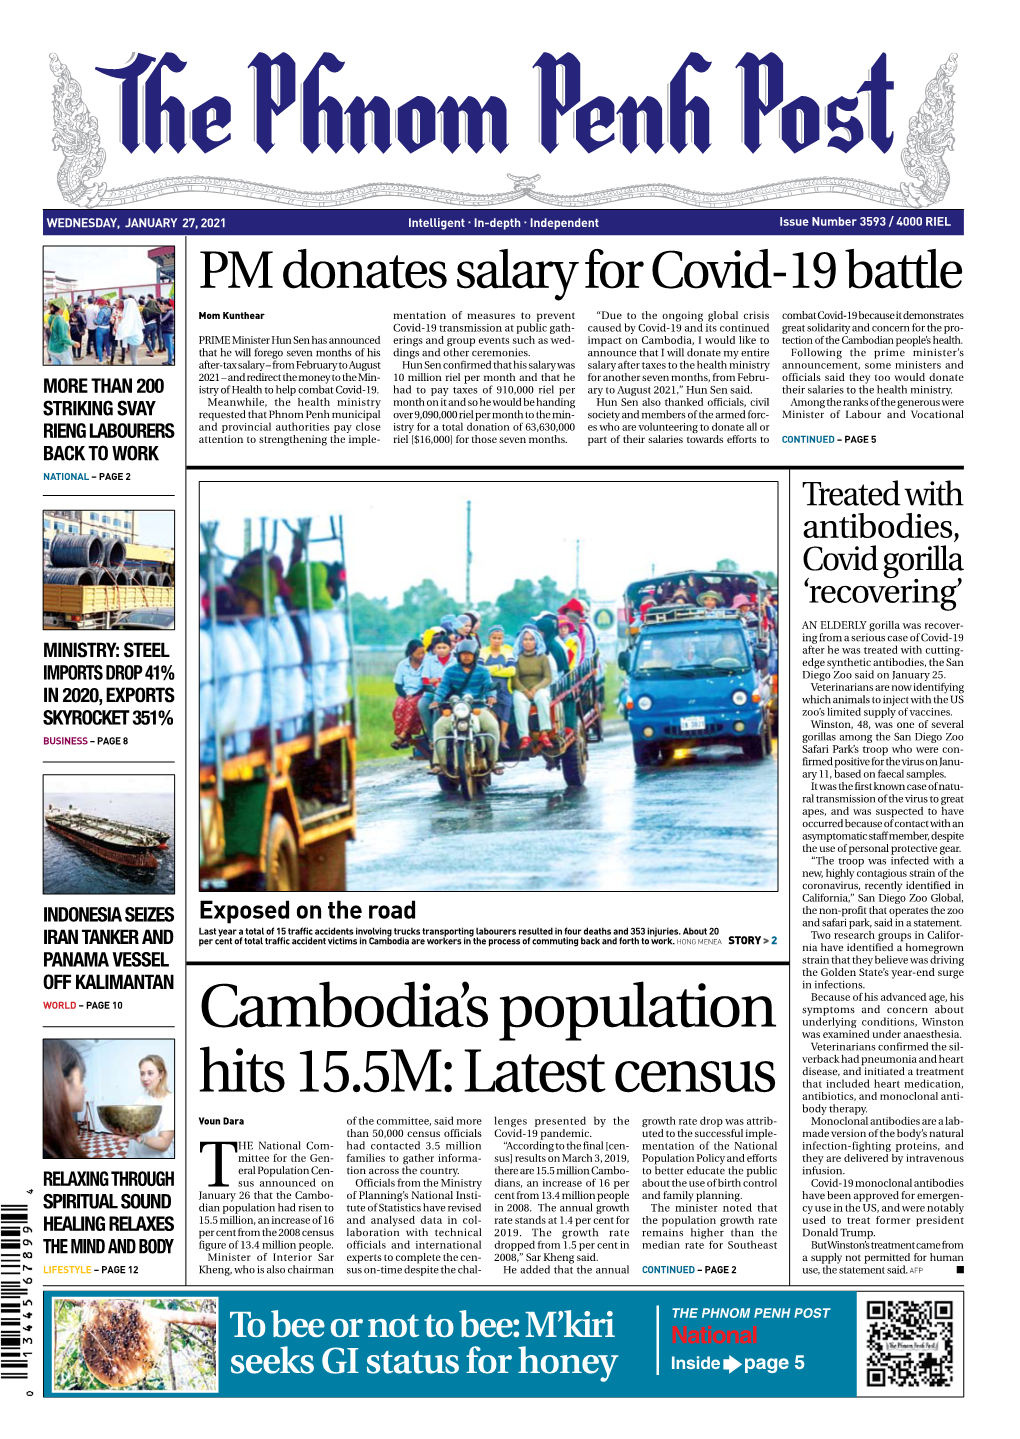 Cambodia's Population Hits 15.5M